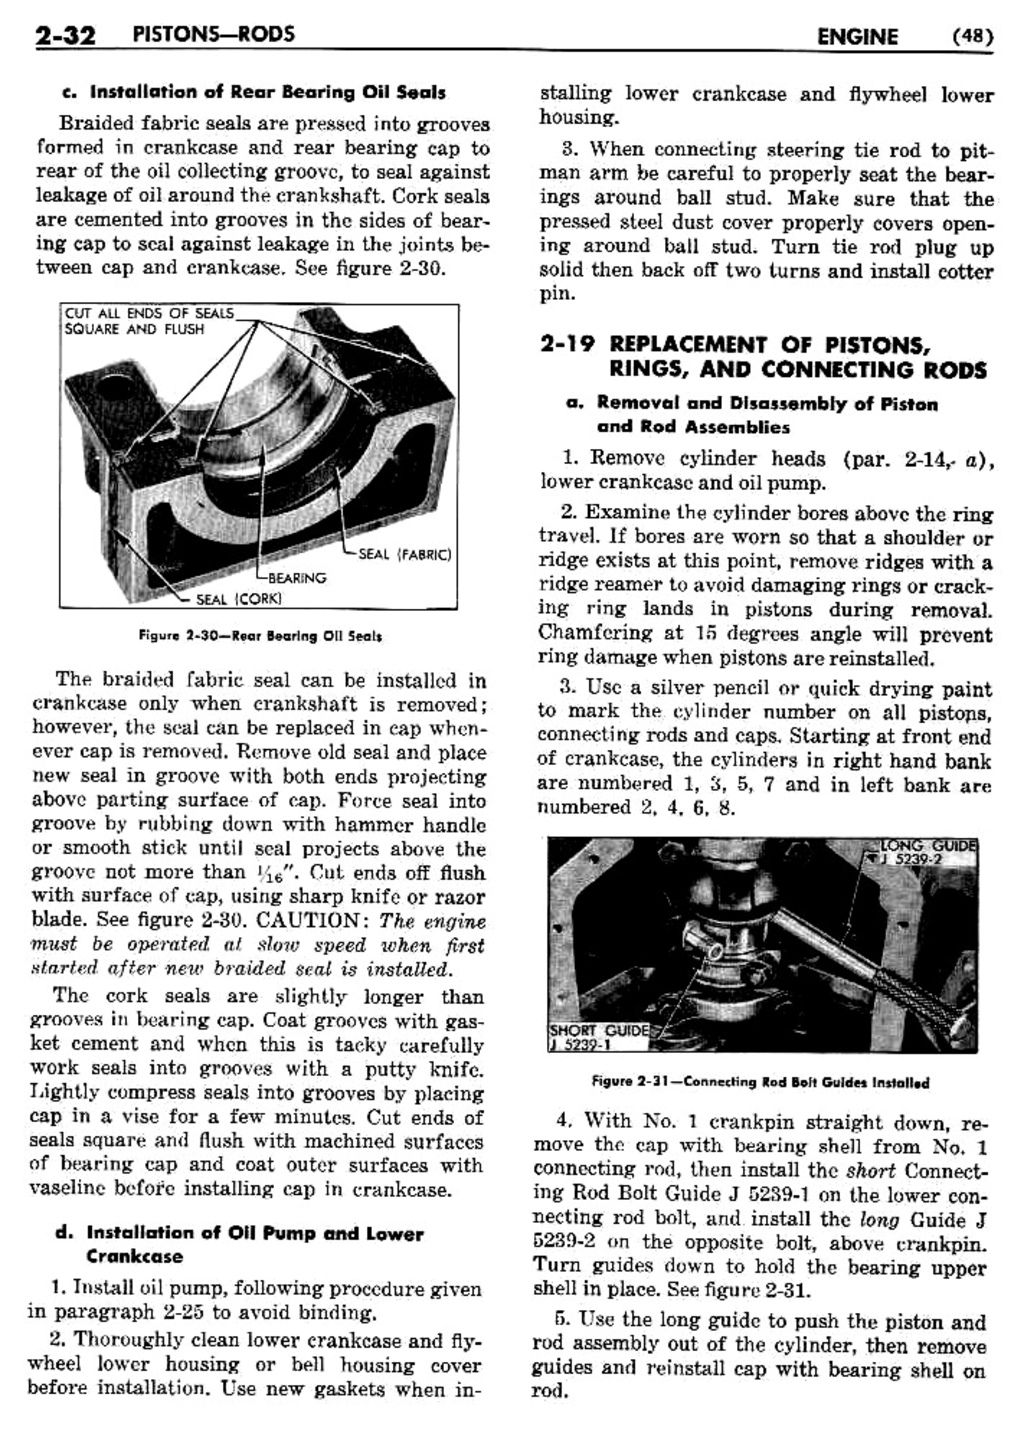 n_03 1955 Buick Shop Manual - Engine-032-032.jpg